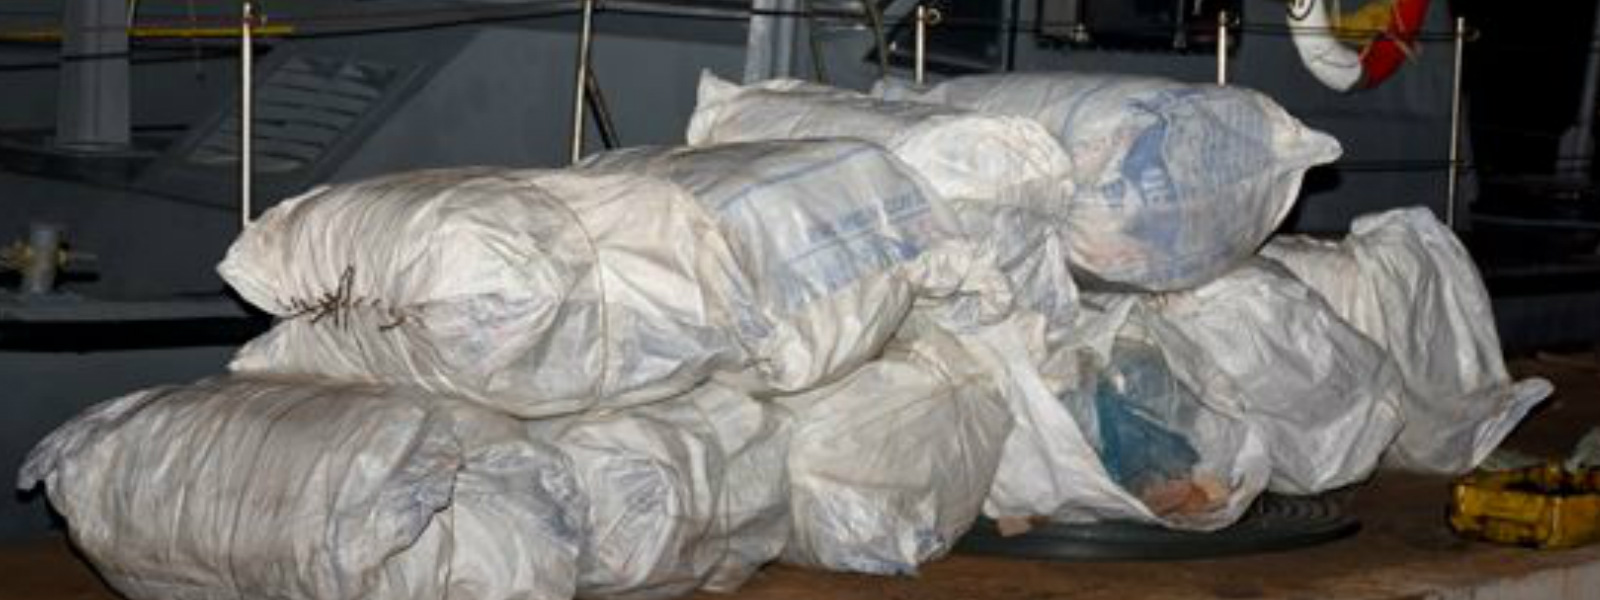 772 kg of beedi leaves seized in Mannar